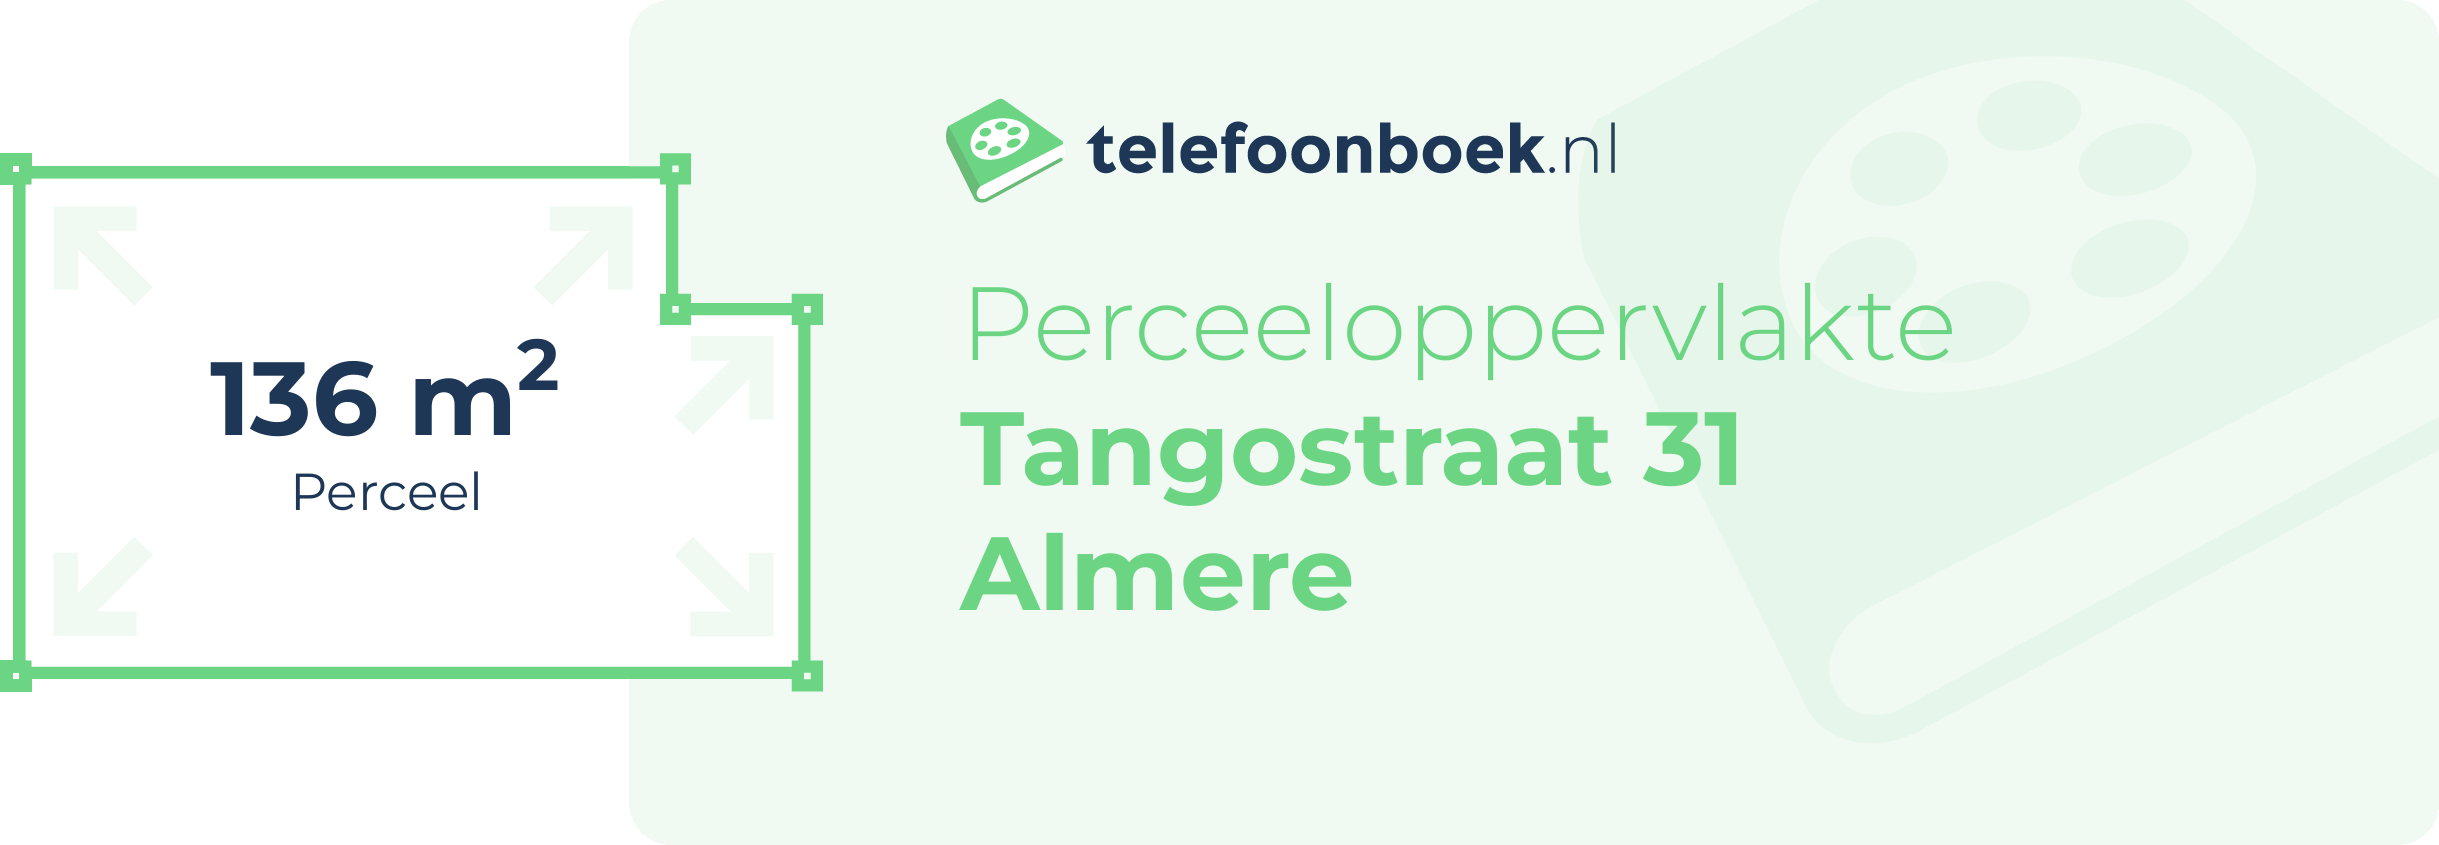 Perceeloppervlakte Tangostraat 31 Almere